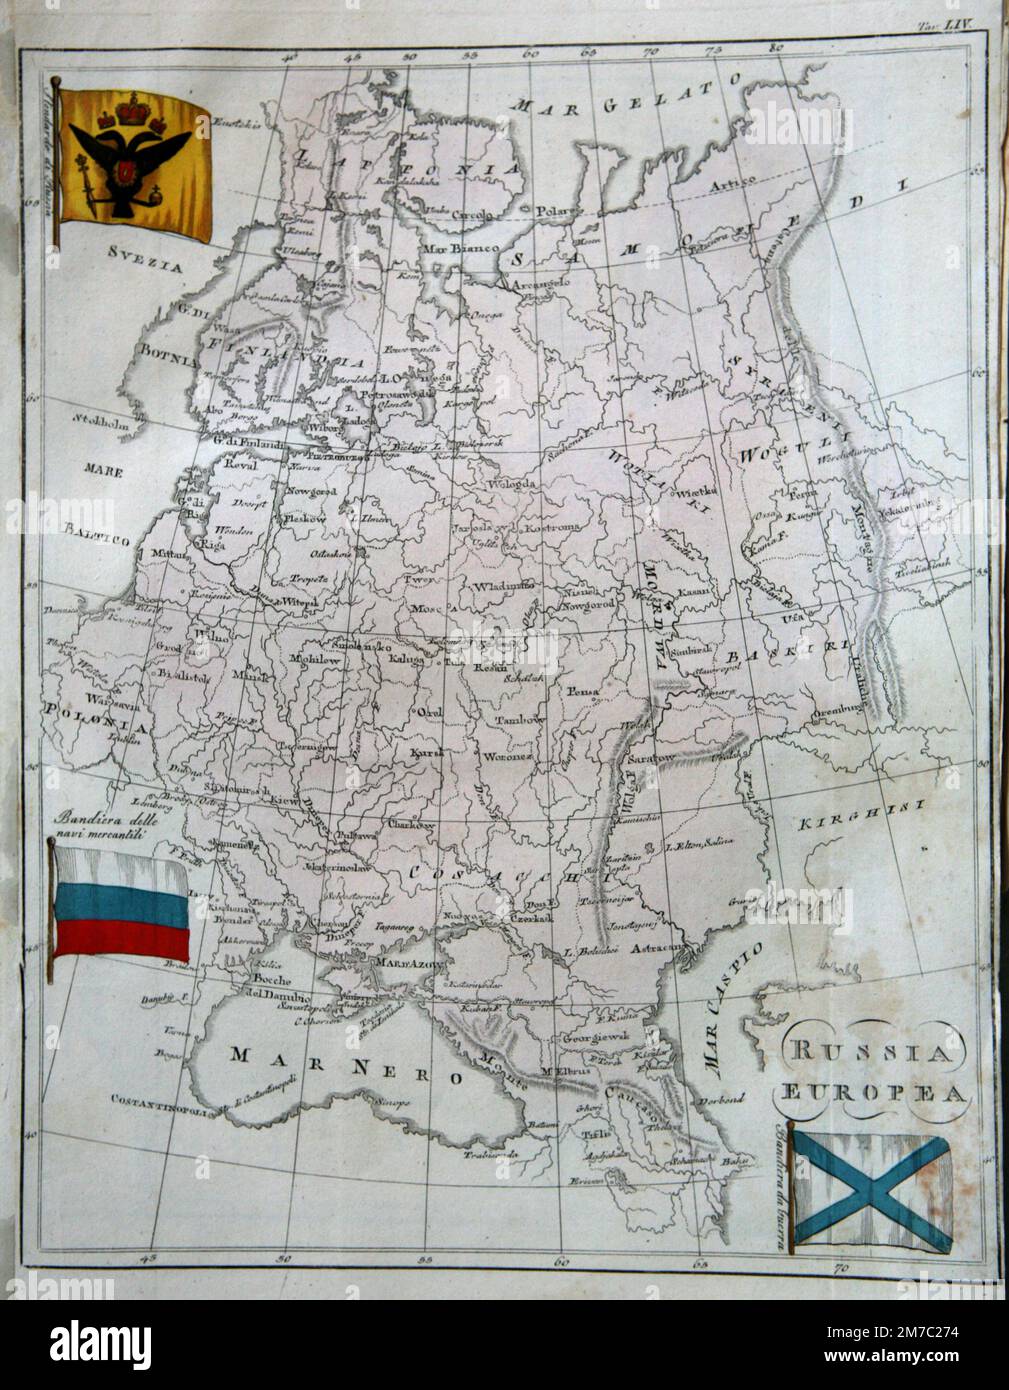 Mapa de Rusia Europea, desde Marmocchi Atlas, Florencia, Italia 1838 Foto de stock